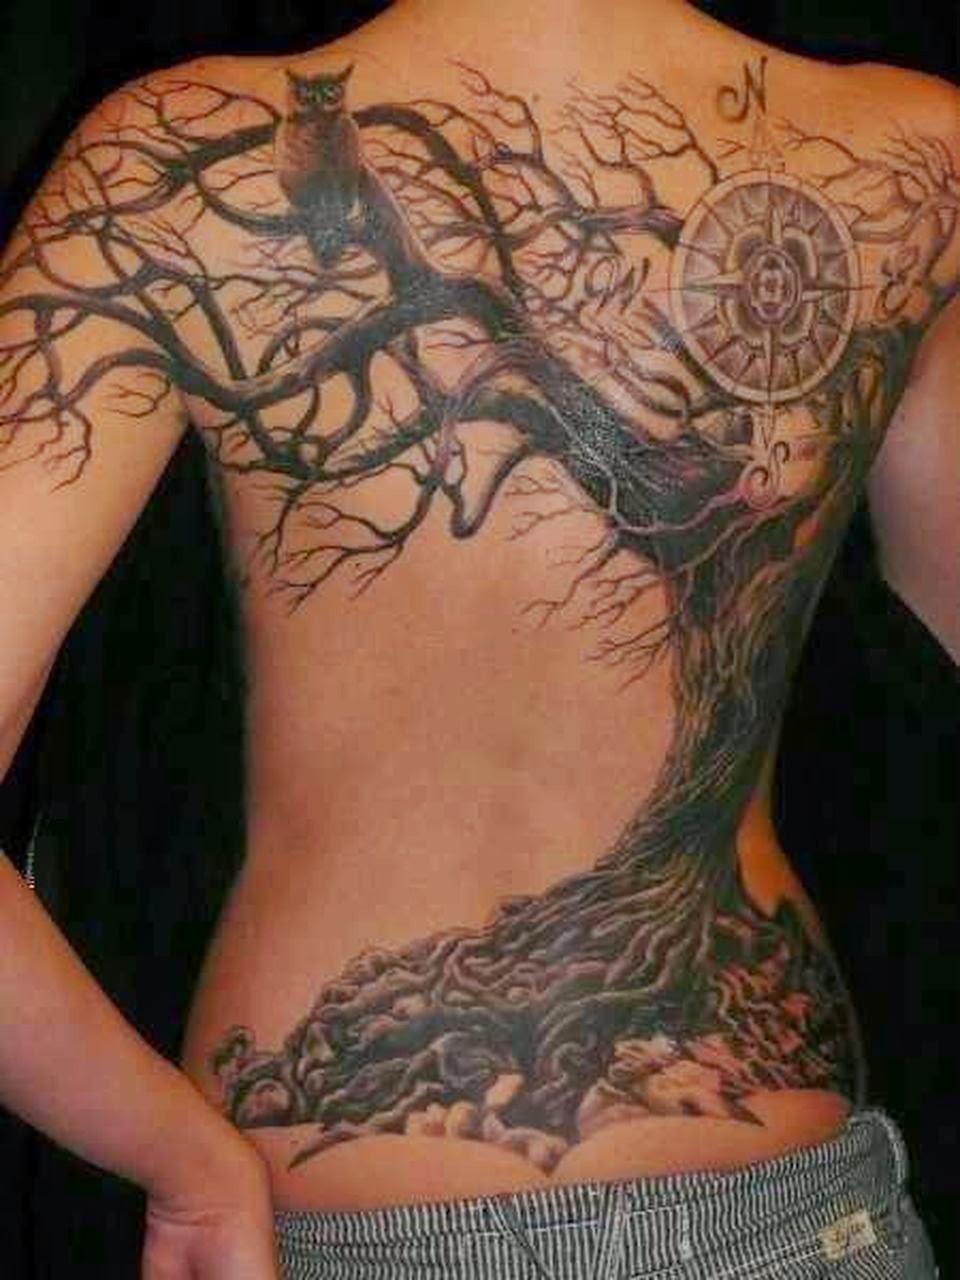 Awesome Big Pagan Tree Tattoo On Full Back